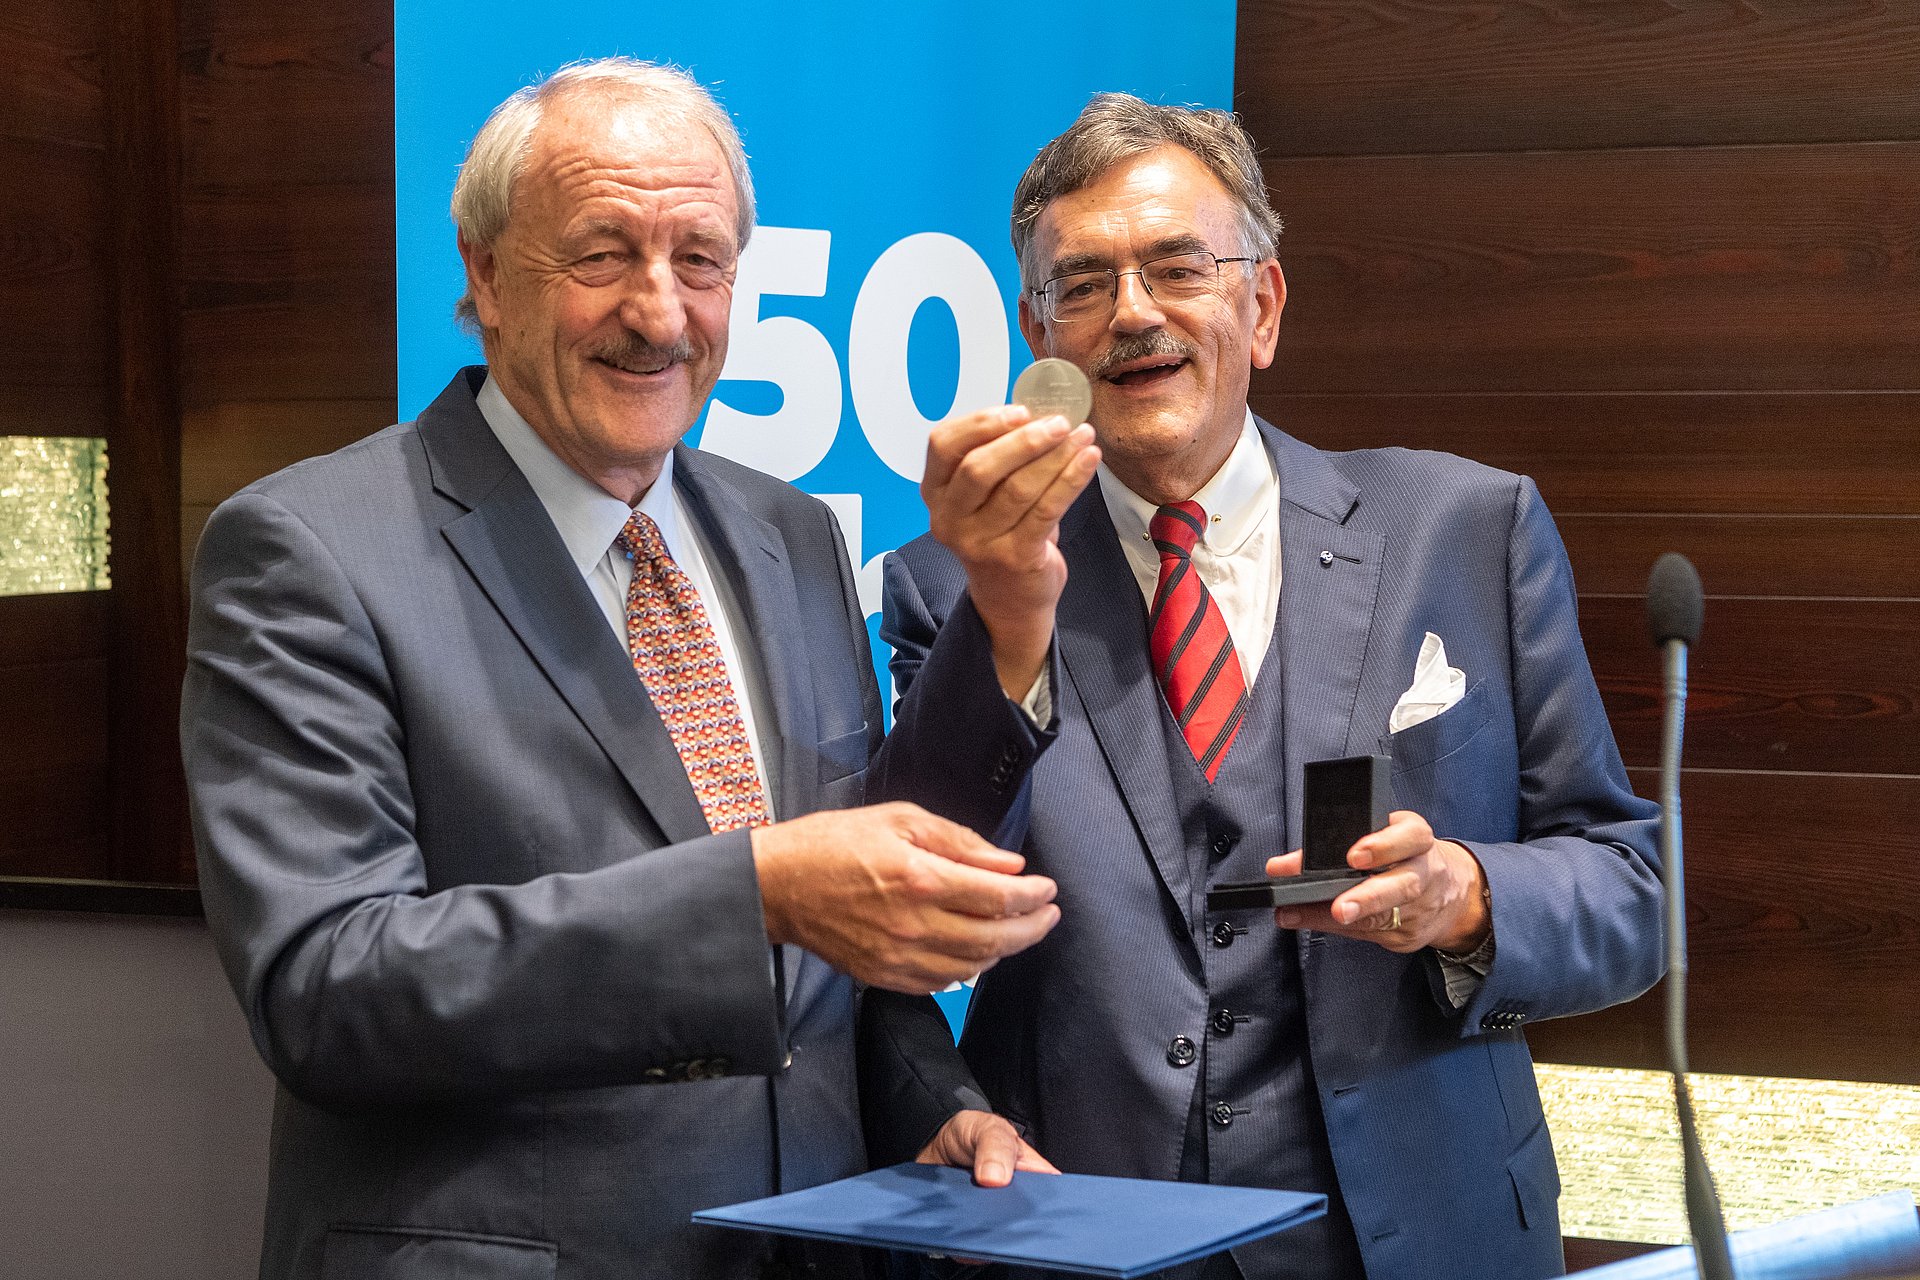 Prof. Dr. Wolfgang A. Herrmann, President of the TUM, (r.) awards the Heinz Maier-Leibnitz Medal to Prof. Dr. Markus Schwaiger, Medical Director of the university hospital TUM Klinikum rechts der Isar.